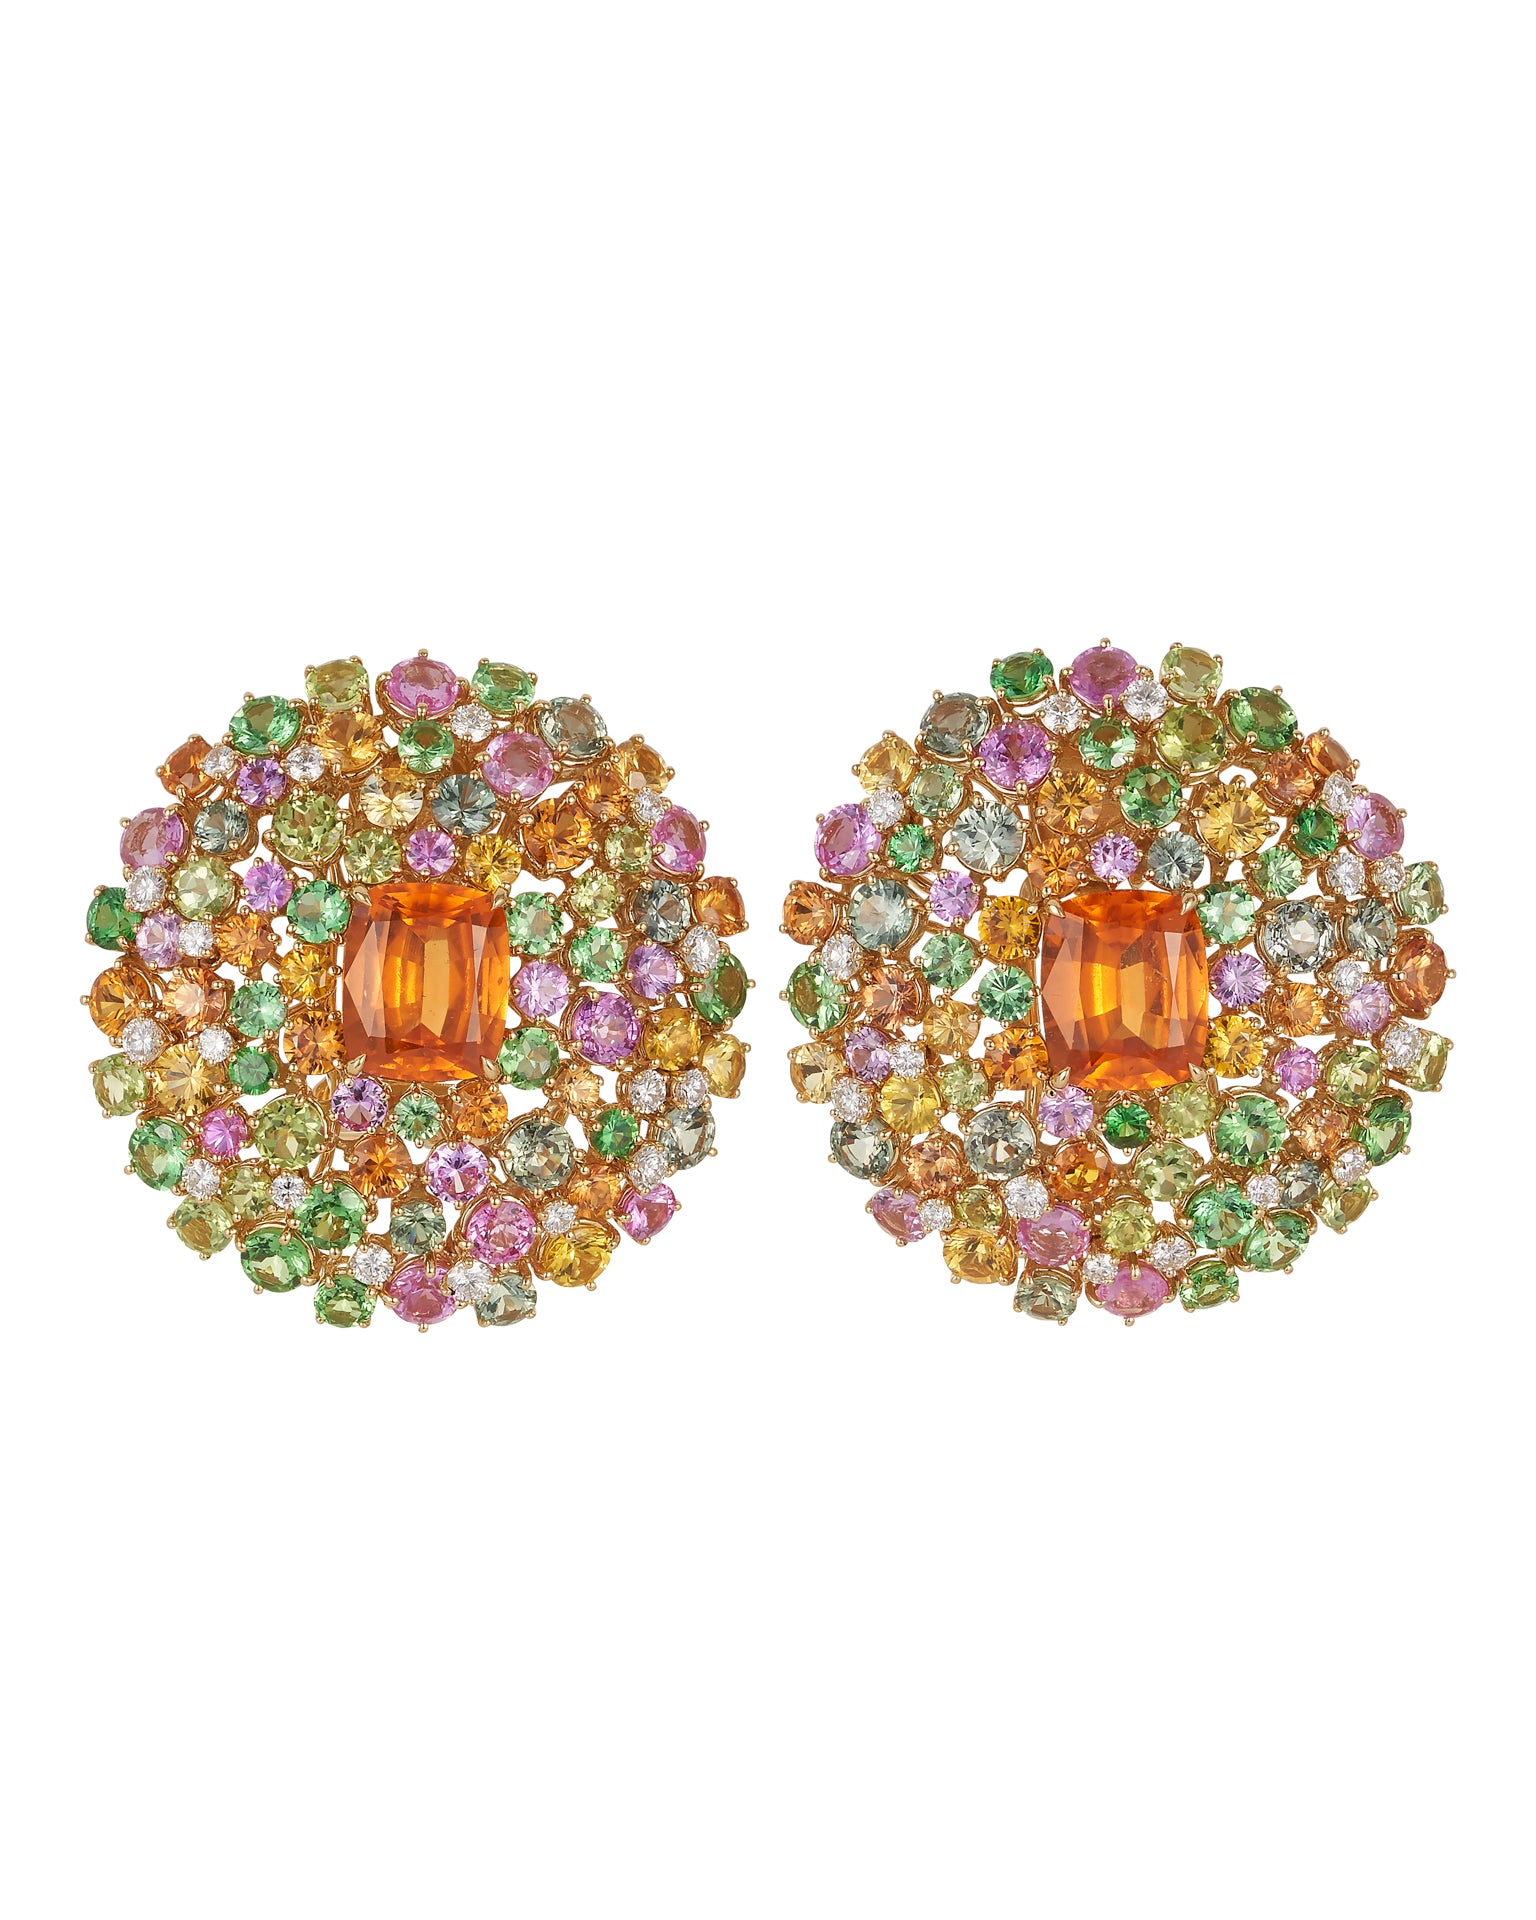 "Orange Burst" mandarin garnet earrings surrounded by a myriad of gemstones, crafted in 18 karat yellow gold.